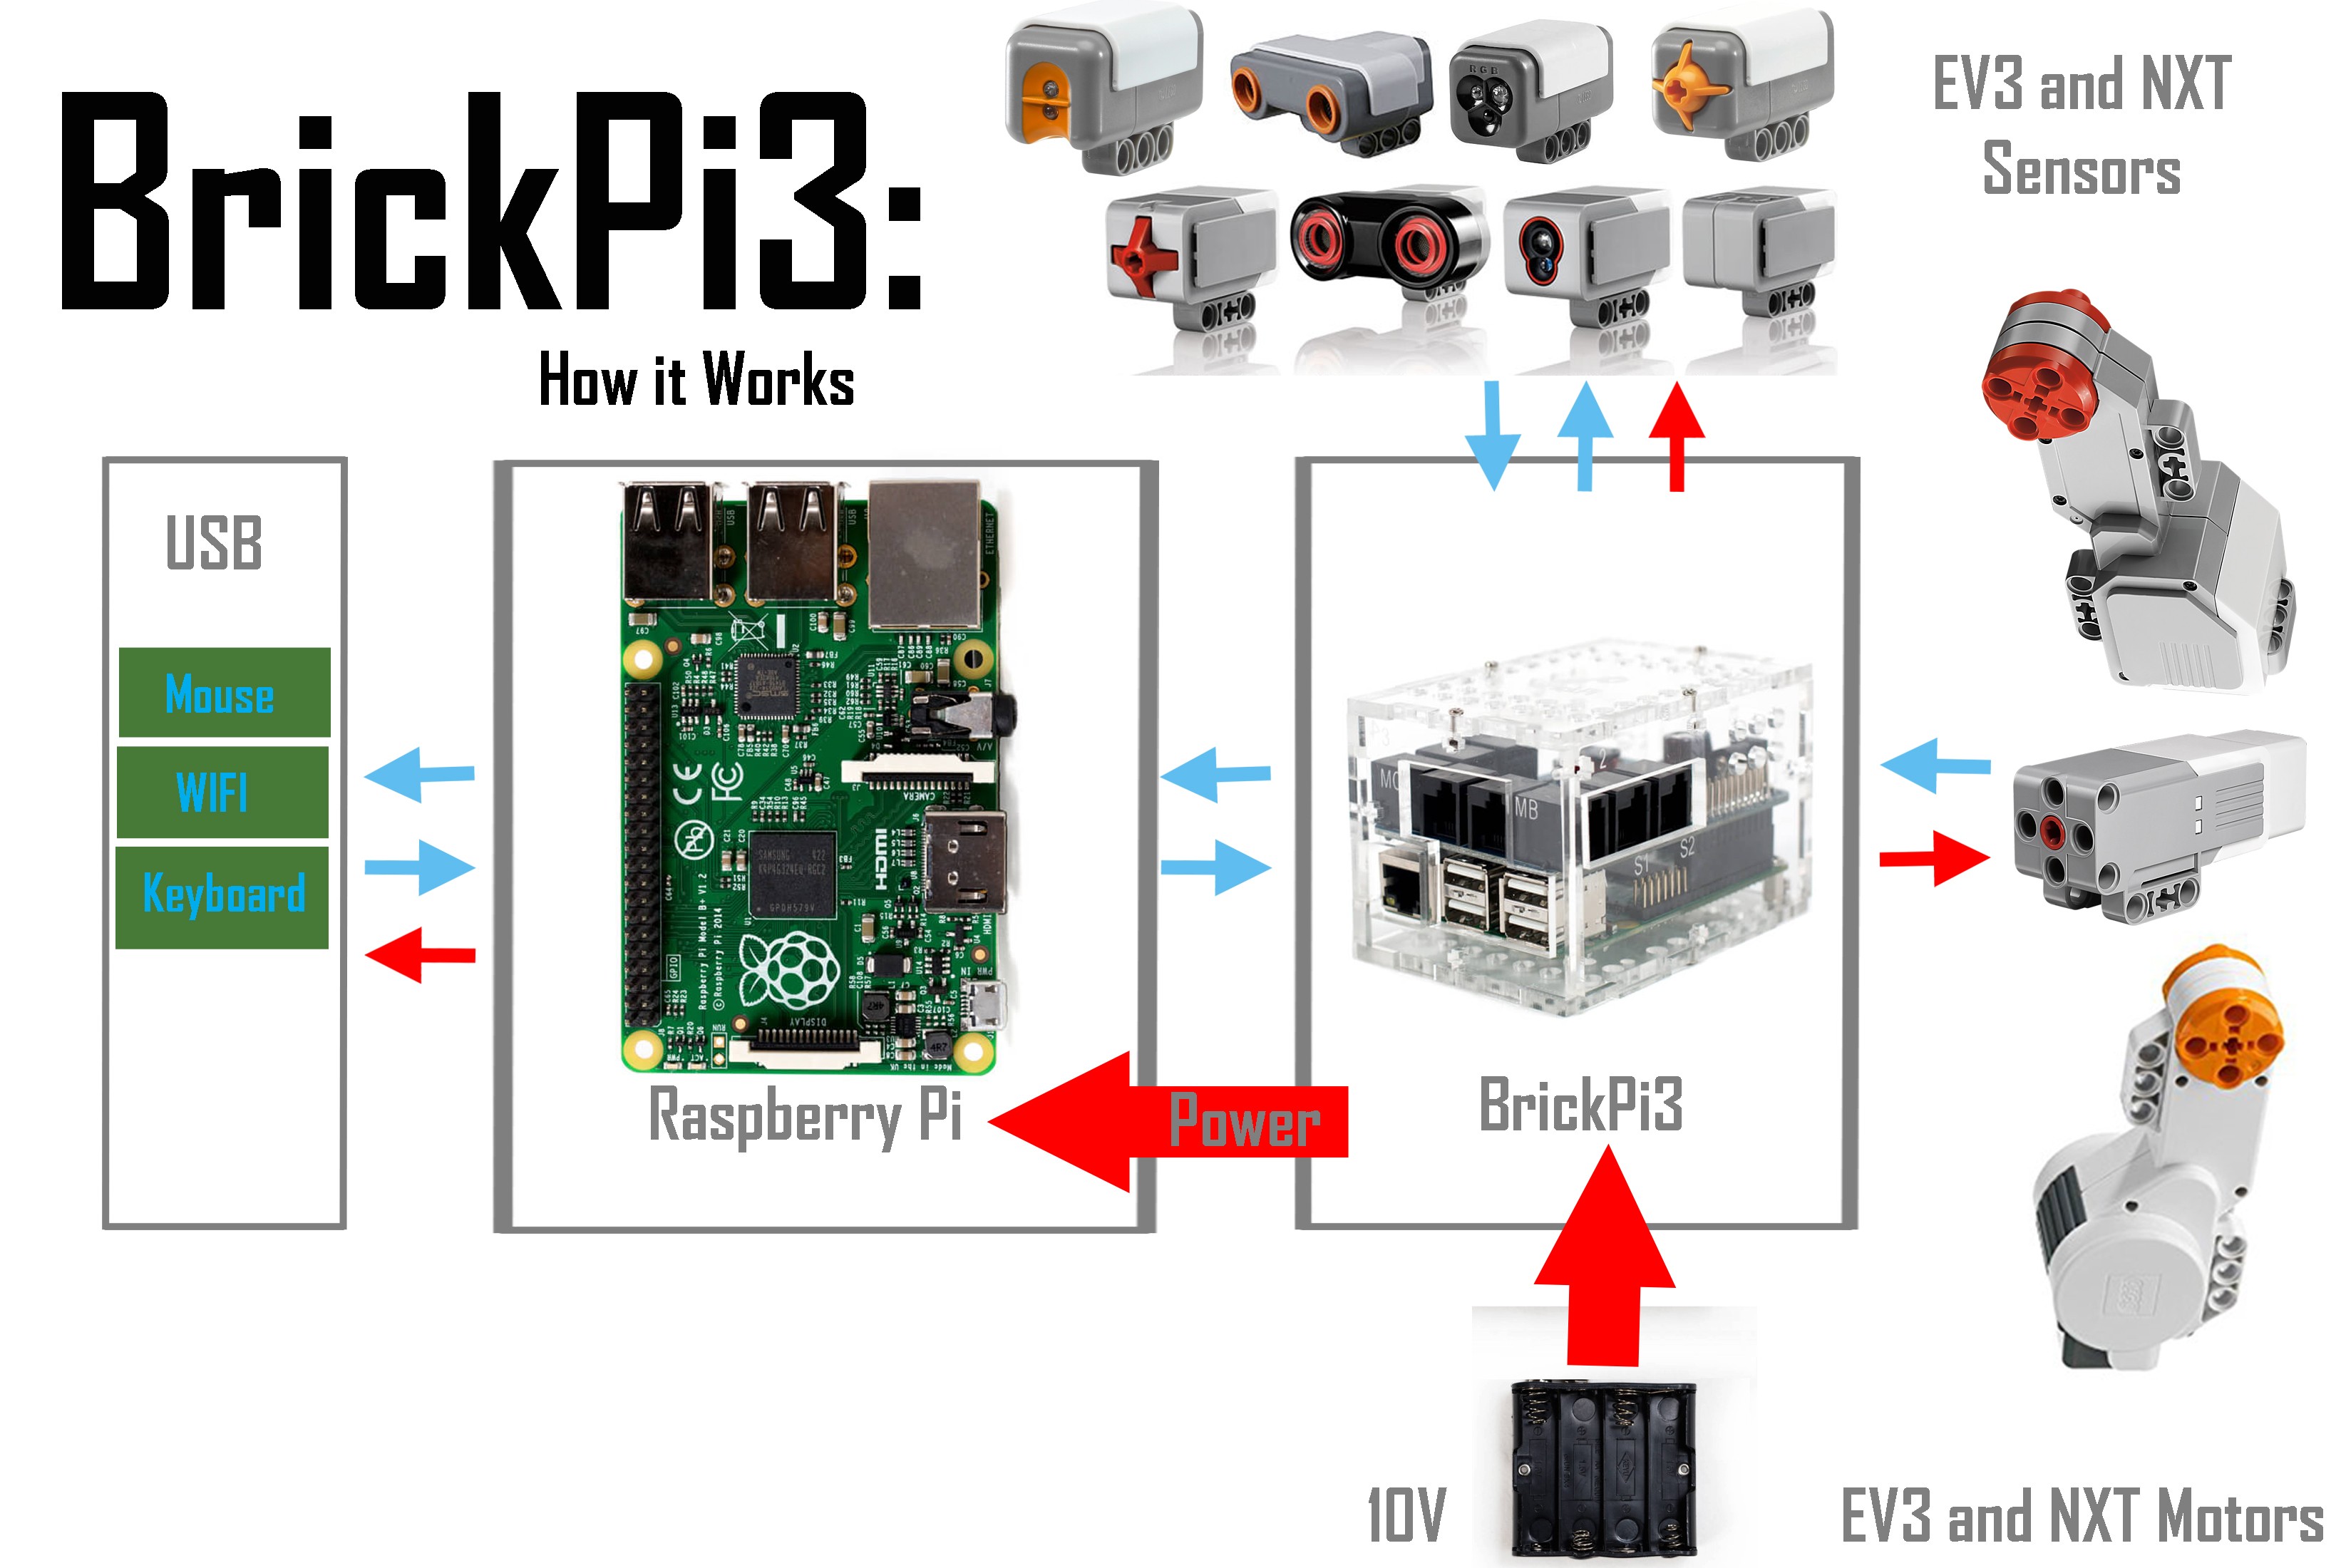 BrickPi3 Technical and Design Details